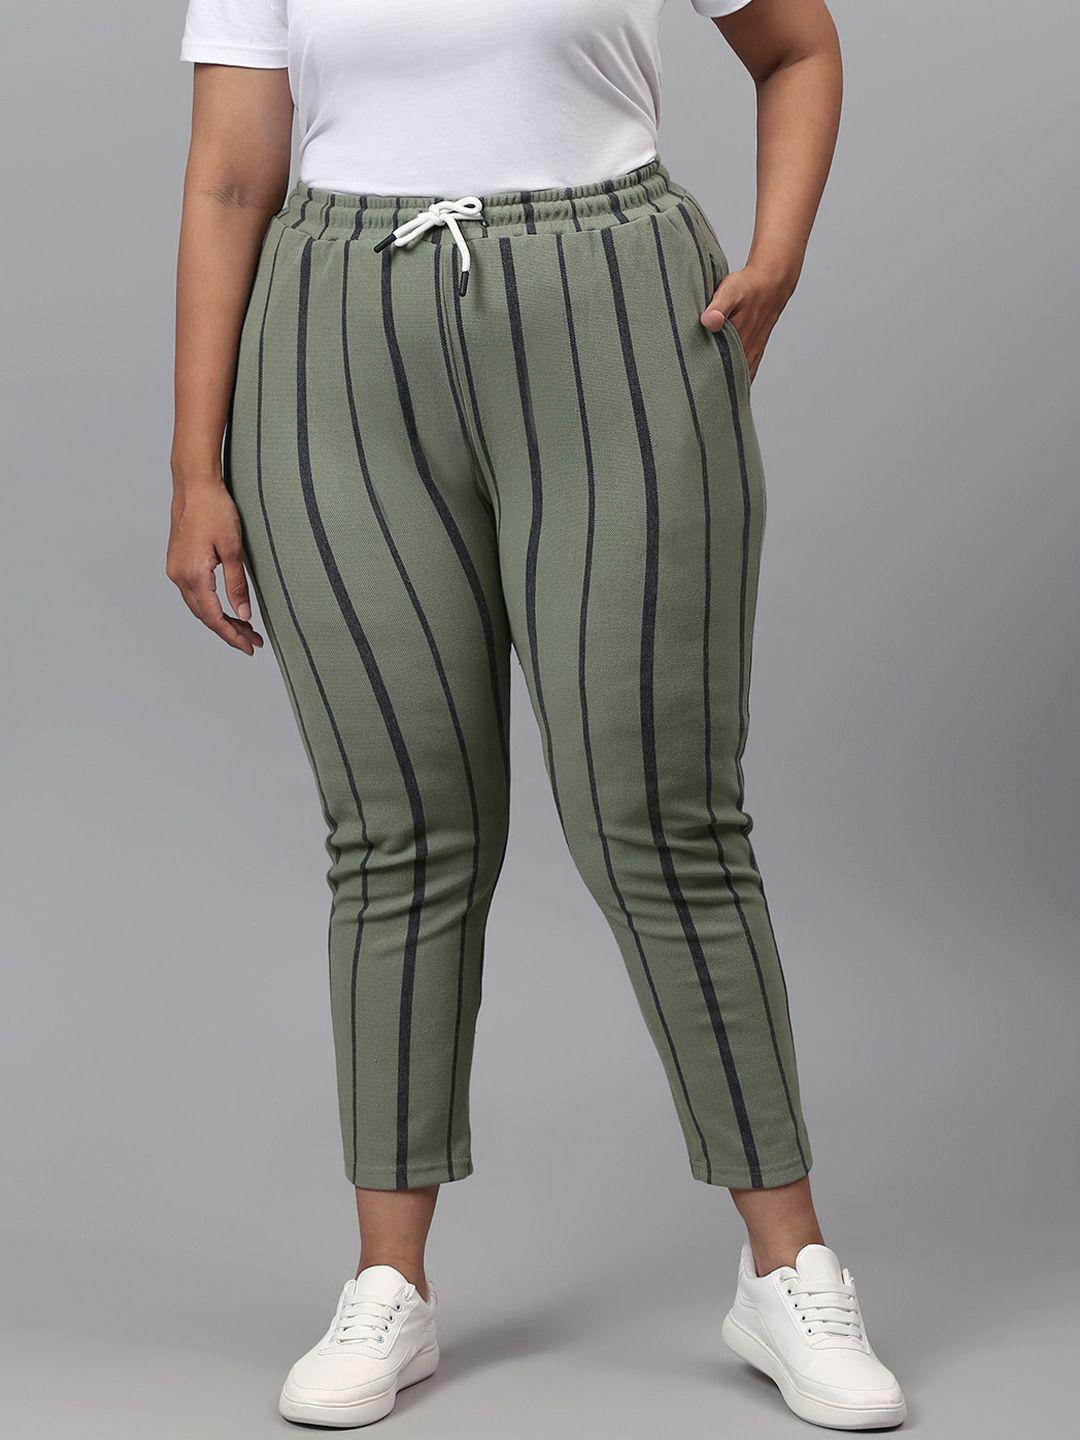 instafab-plus-women-green-&-black-striped-cotton-track-pants